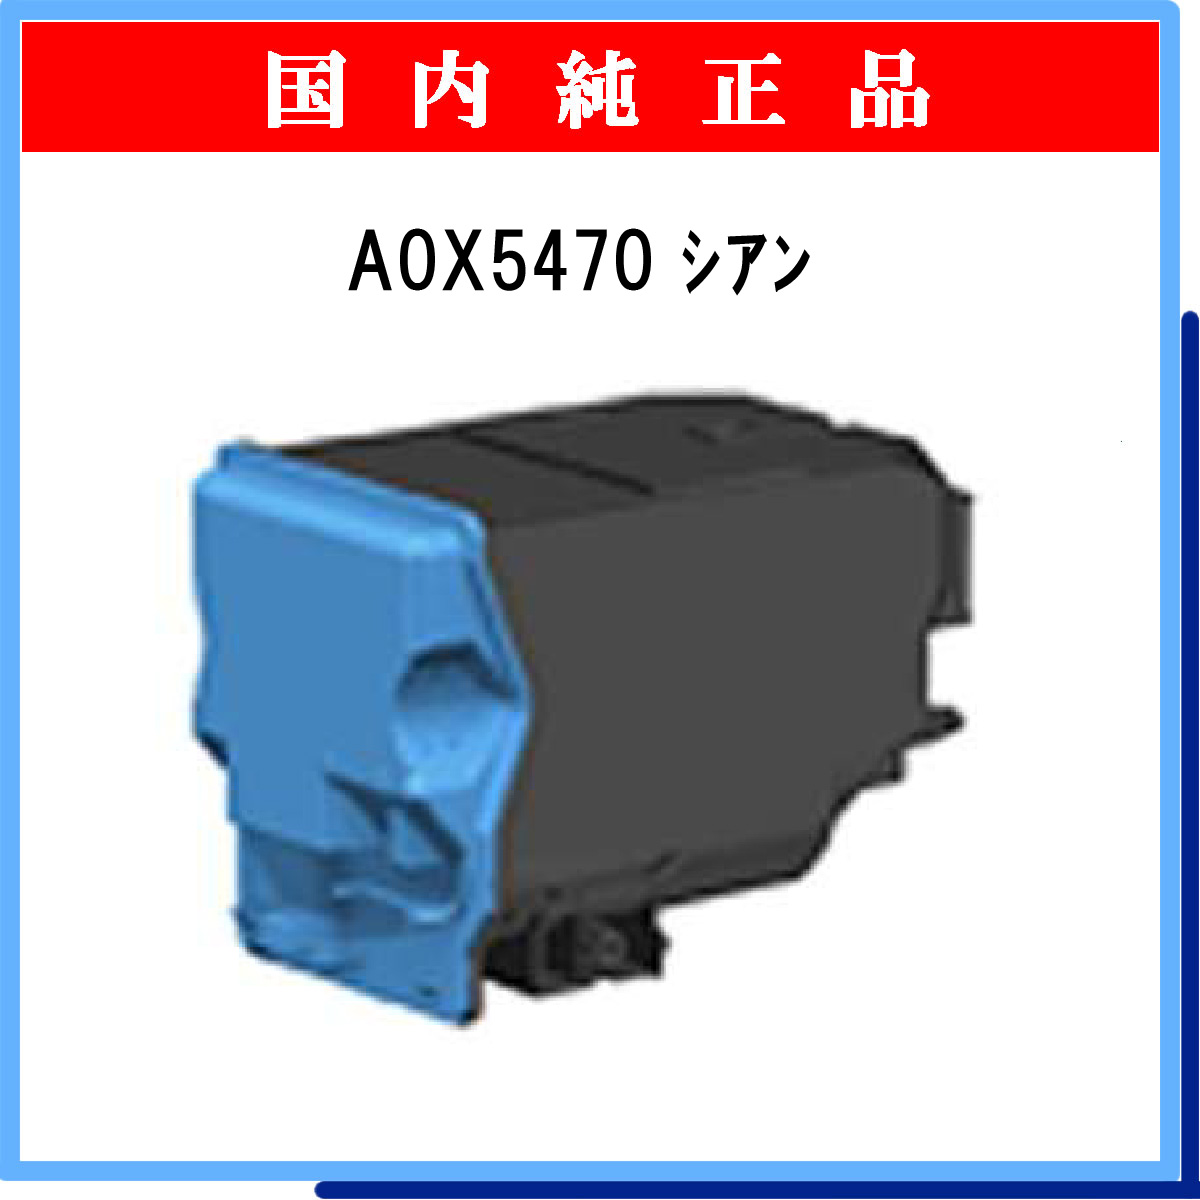 A0X5470 シアン (大容量) 純正